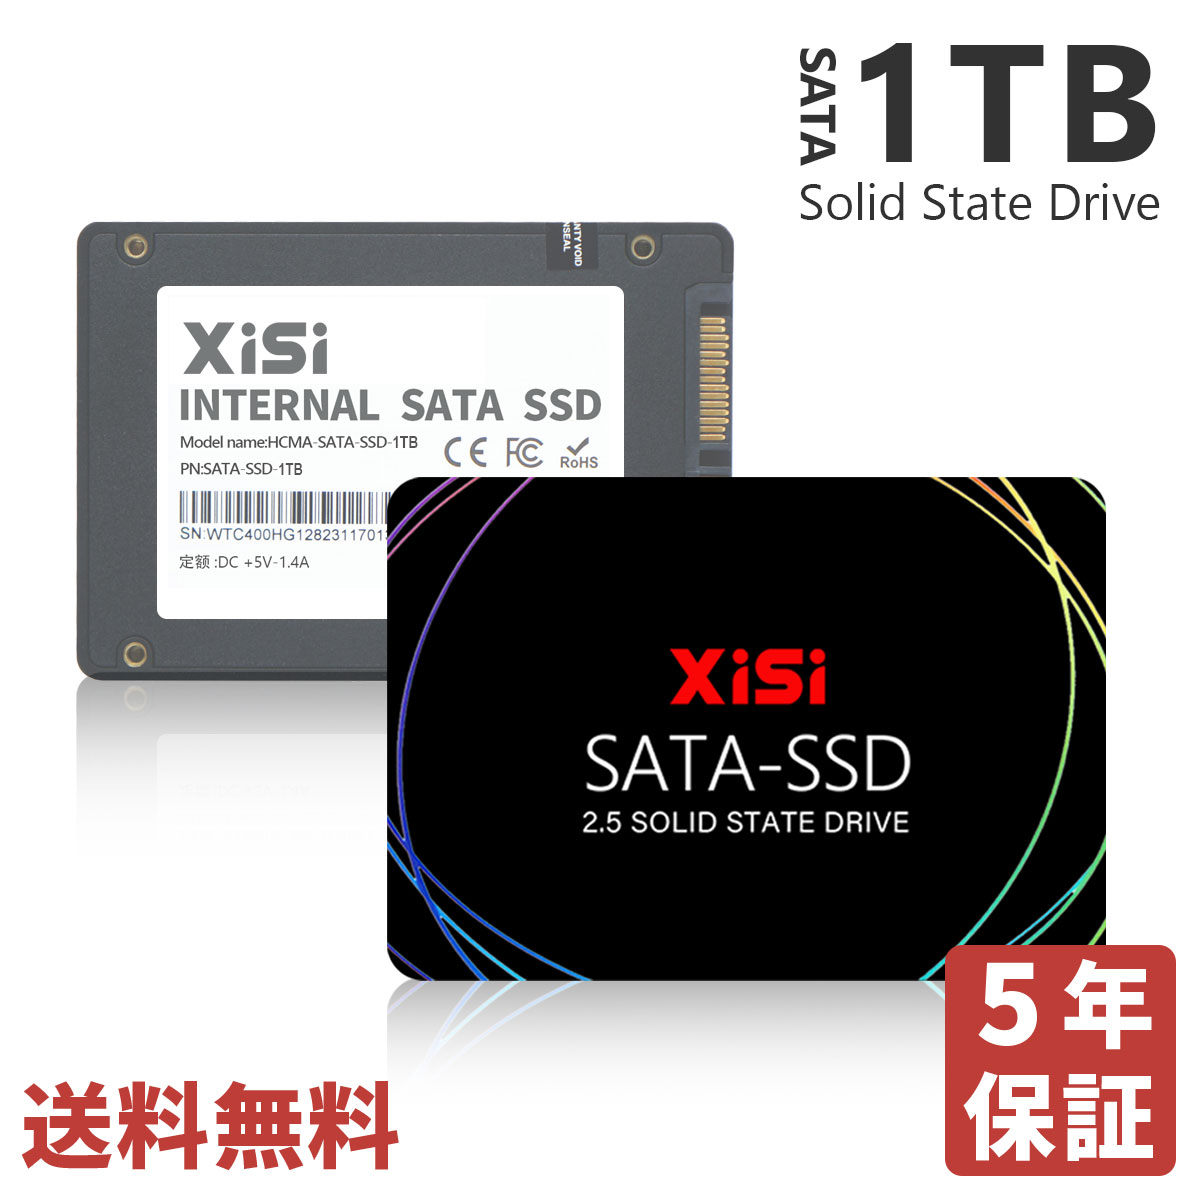 SSD 1TB XISI-SSD-1TB SATA【5年半保証・翌日配達送料無料】内蔵 2.5インチ 7mm SATAIII 6Gb/s 520MB/s 3D NAND採用 デスクトップパソコン ノートパソコン PS4検証済み エラー訂正機能